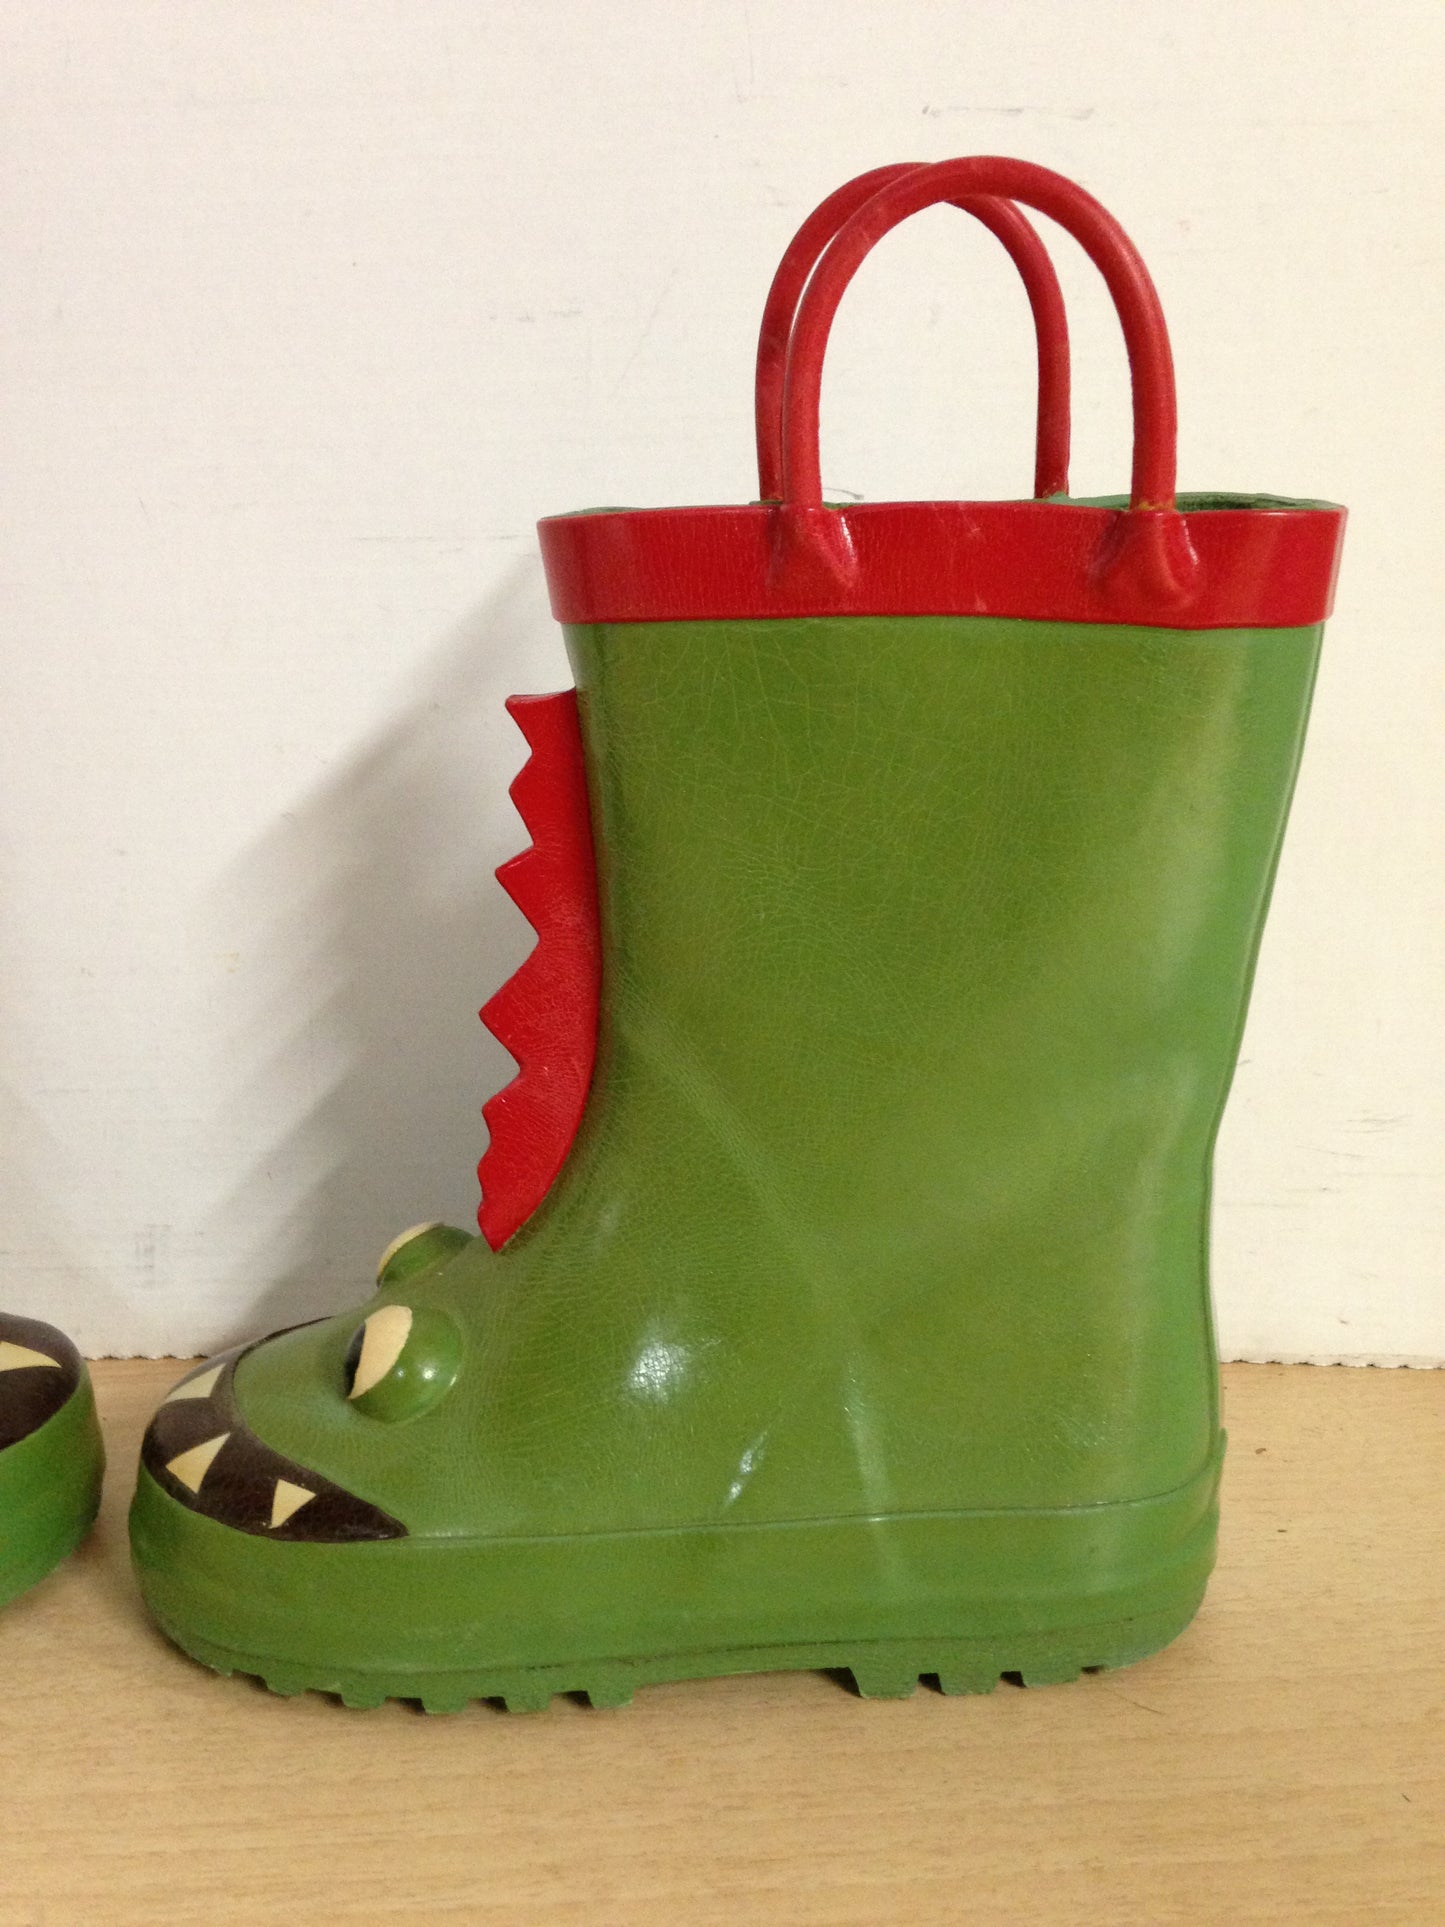 Rain Boots Child Size 7 Toddler Green Dinosaur